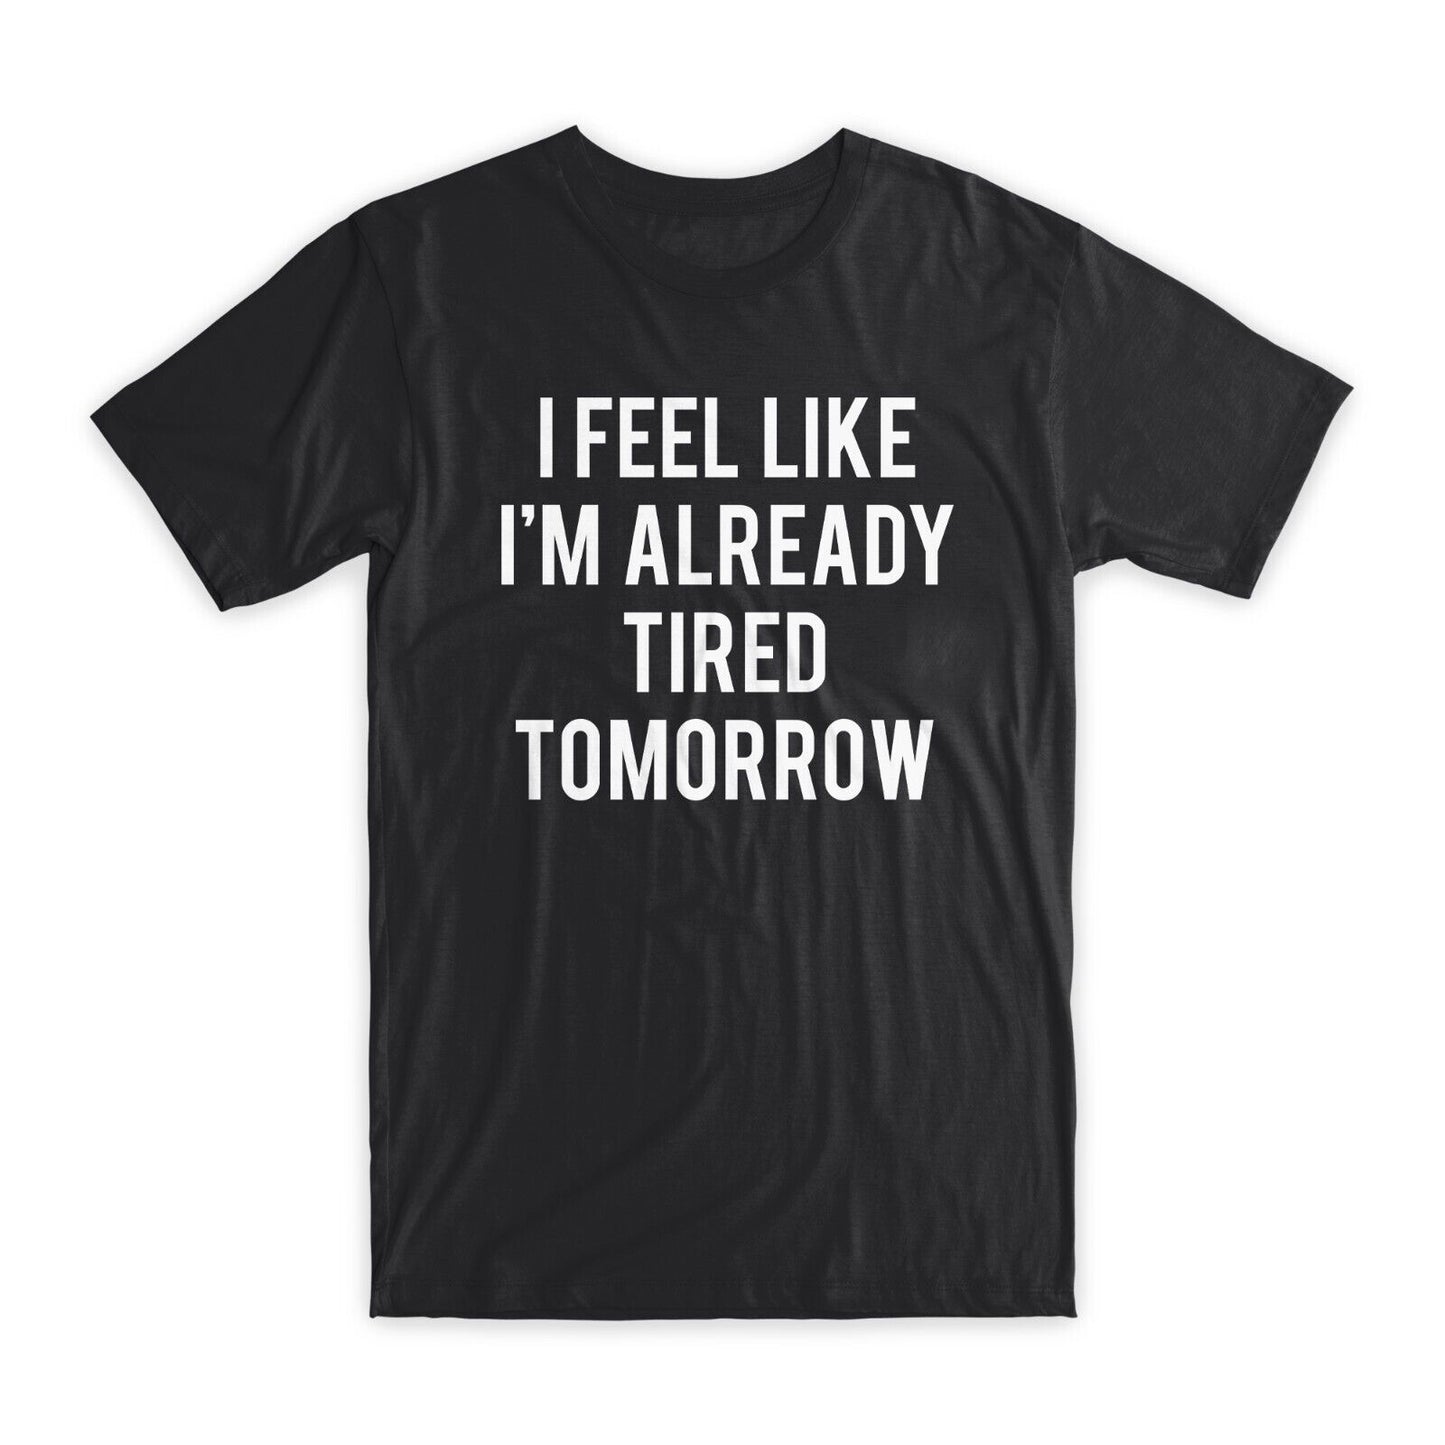 I Feel Like I'm Already Tired Tomorrow T-Shirt Premium Cotton Funny Tee Gift NEW